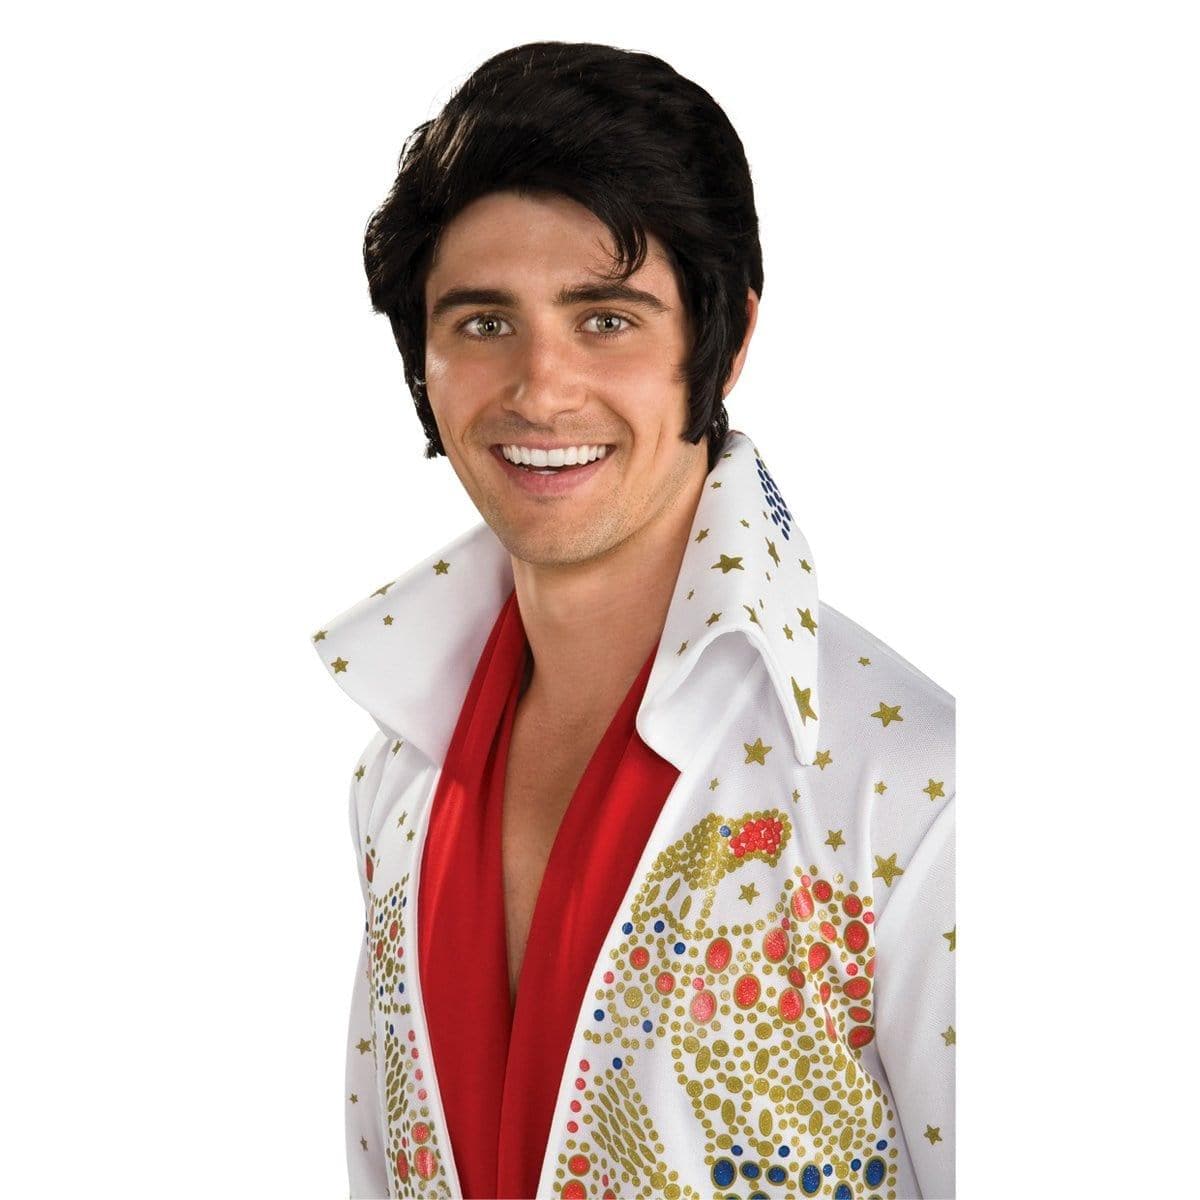 Buy Costume Accessories Elvis Presley wig for men, Elvis Presley sold at Party Expert